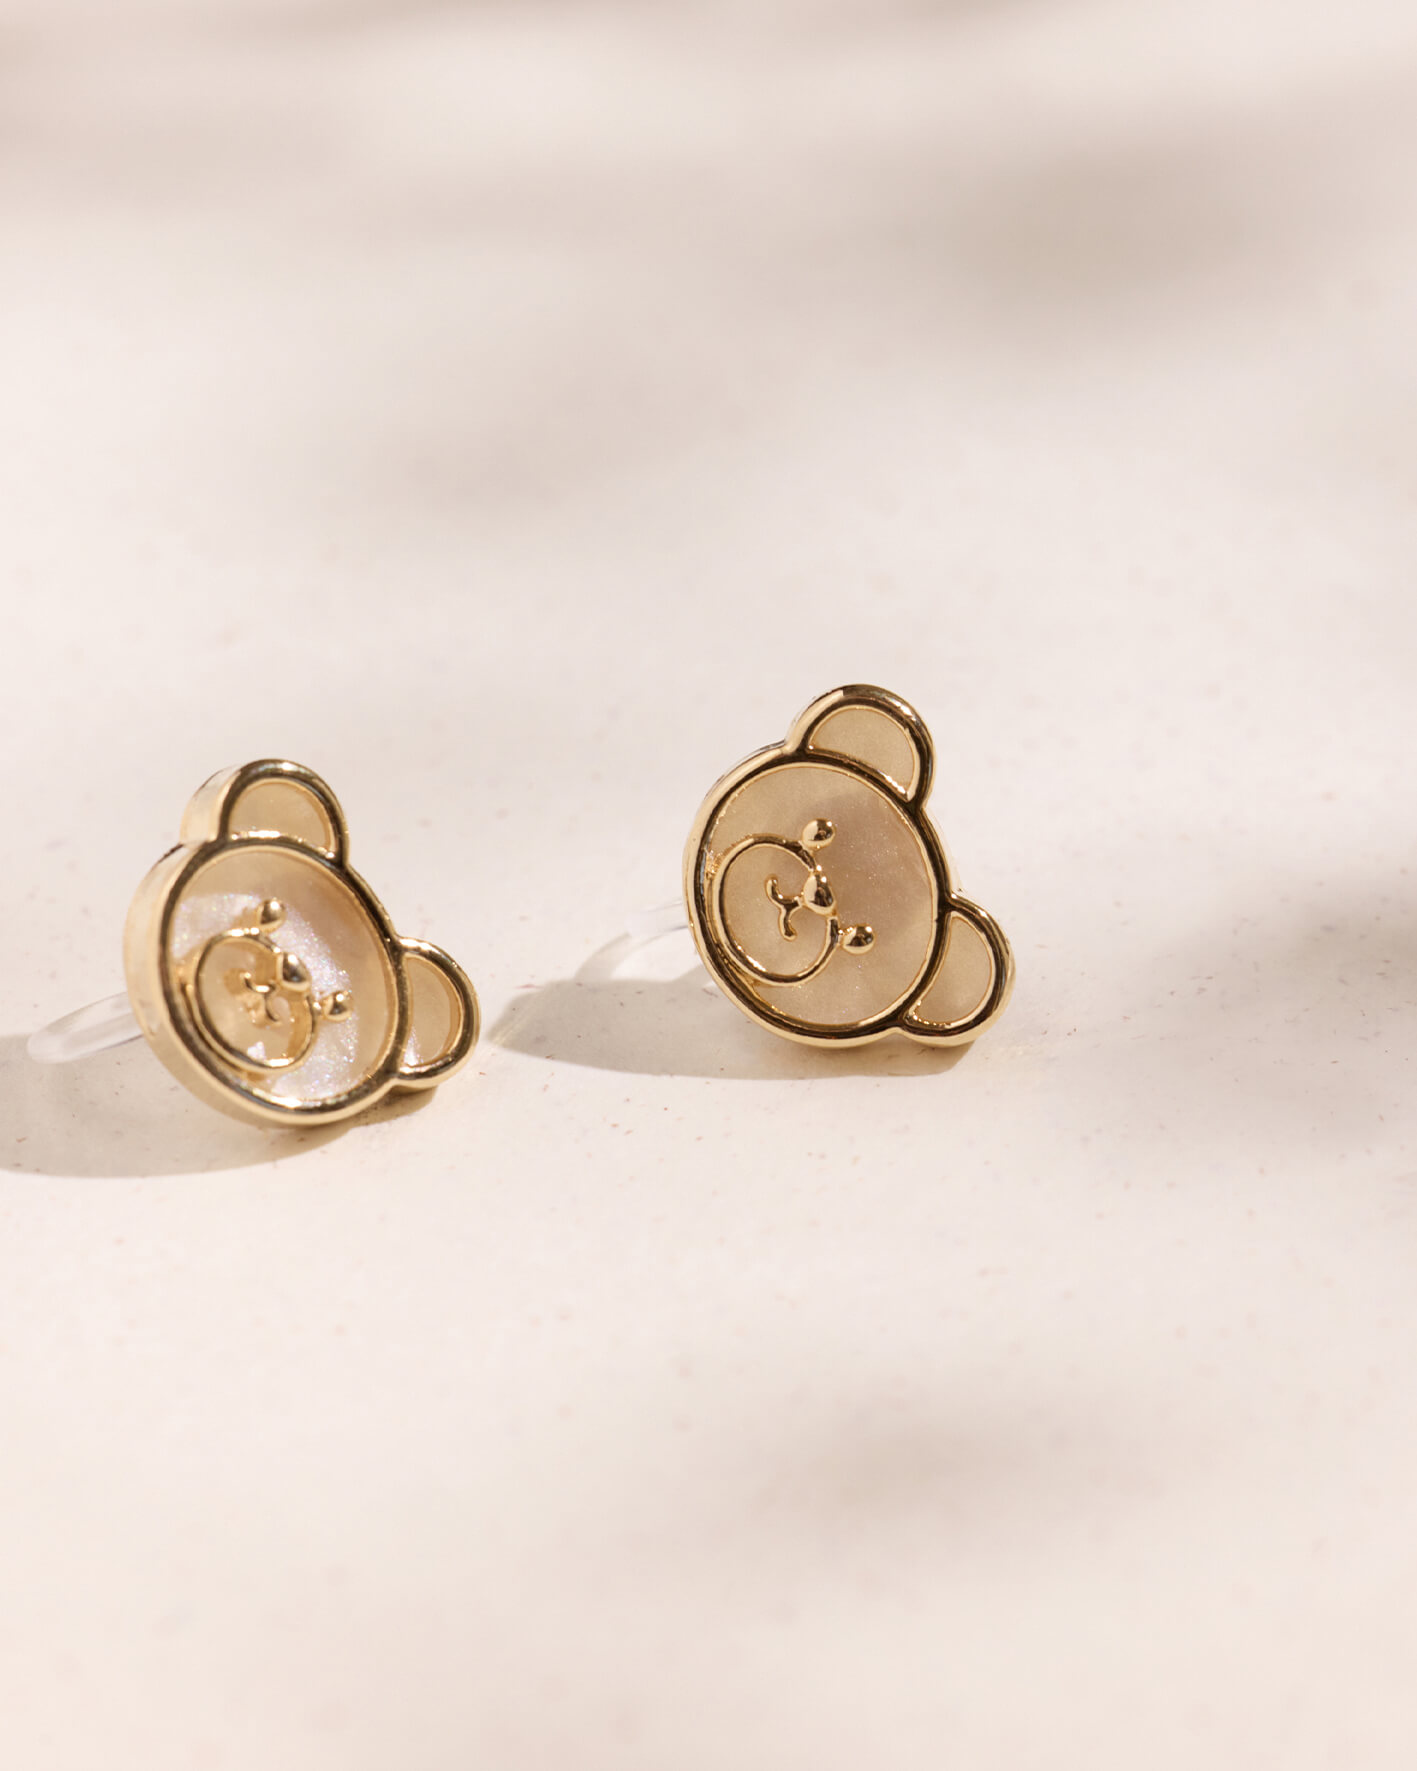 Eco安珂,韓國飾品,韓國耳環,耳針式耳環,矽膠夾耳環,透明耳夾耳環,無痛耳夾耳環,熊耳環